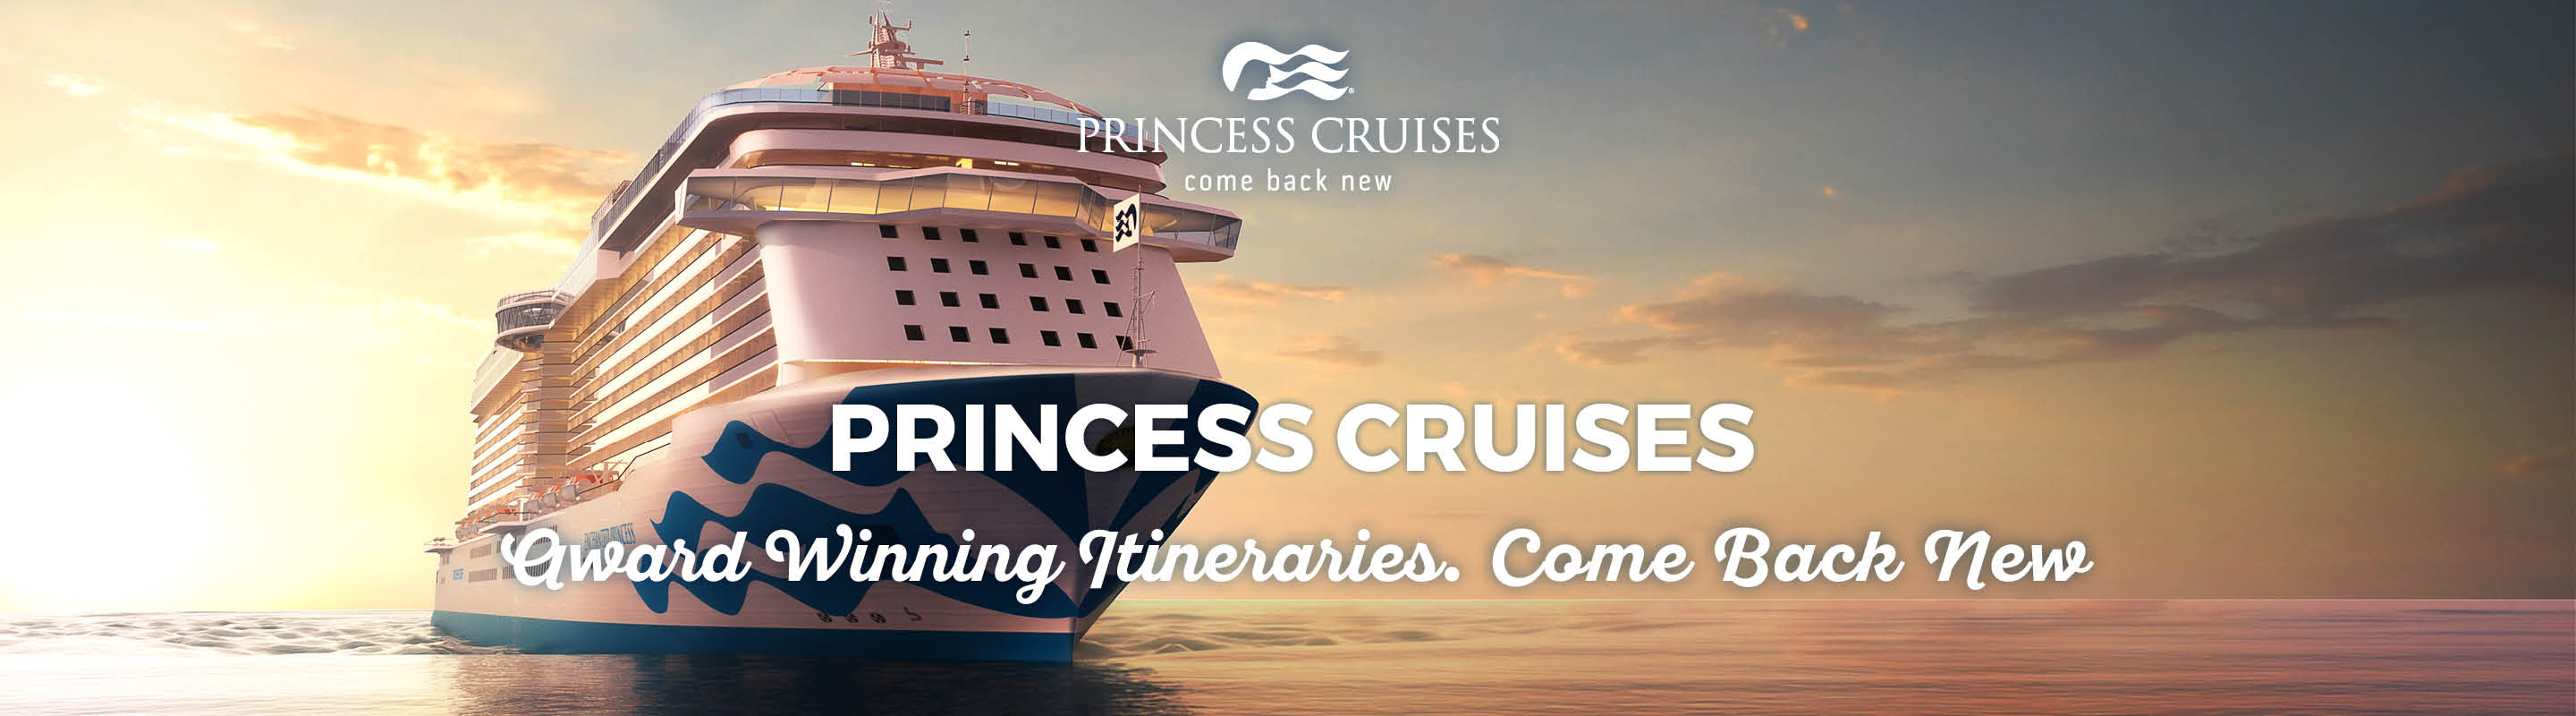 princess-cruise-offers.jpg